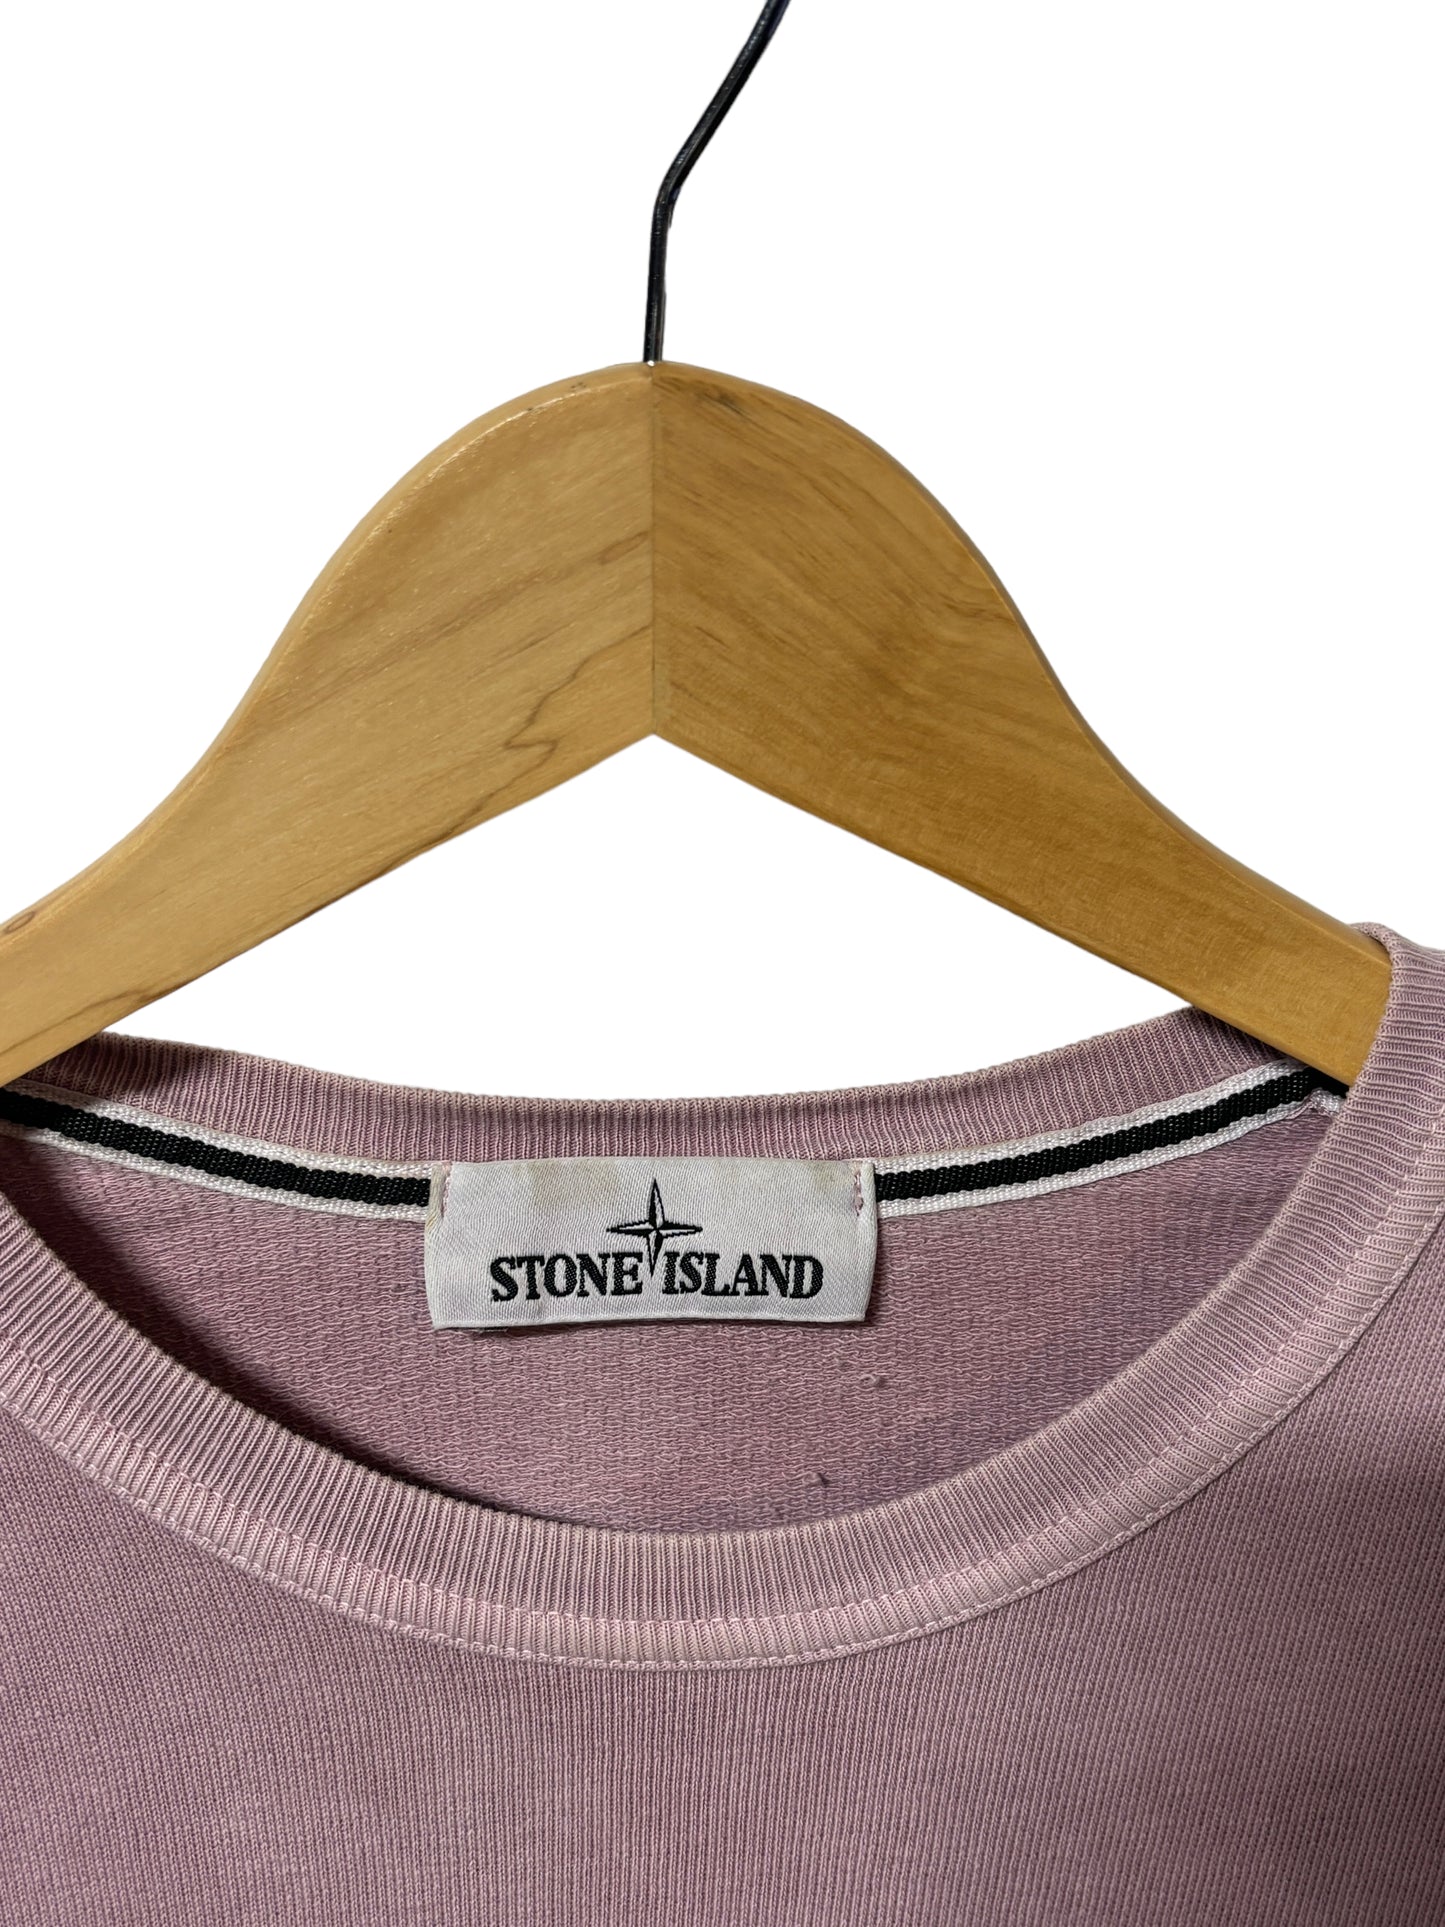 Stone Island Overdyed Lavender Purple Crewneck Sweater Size Medium